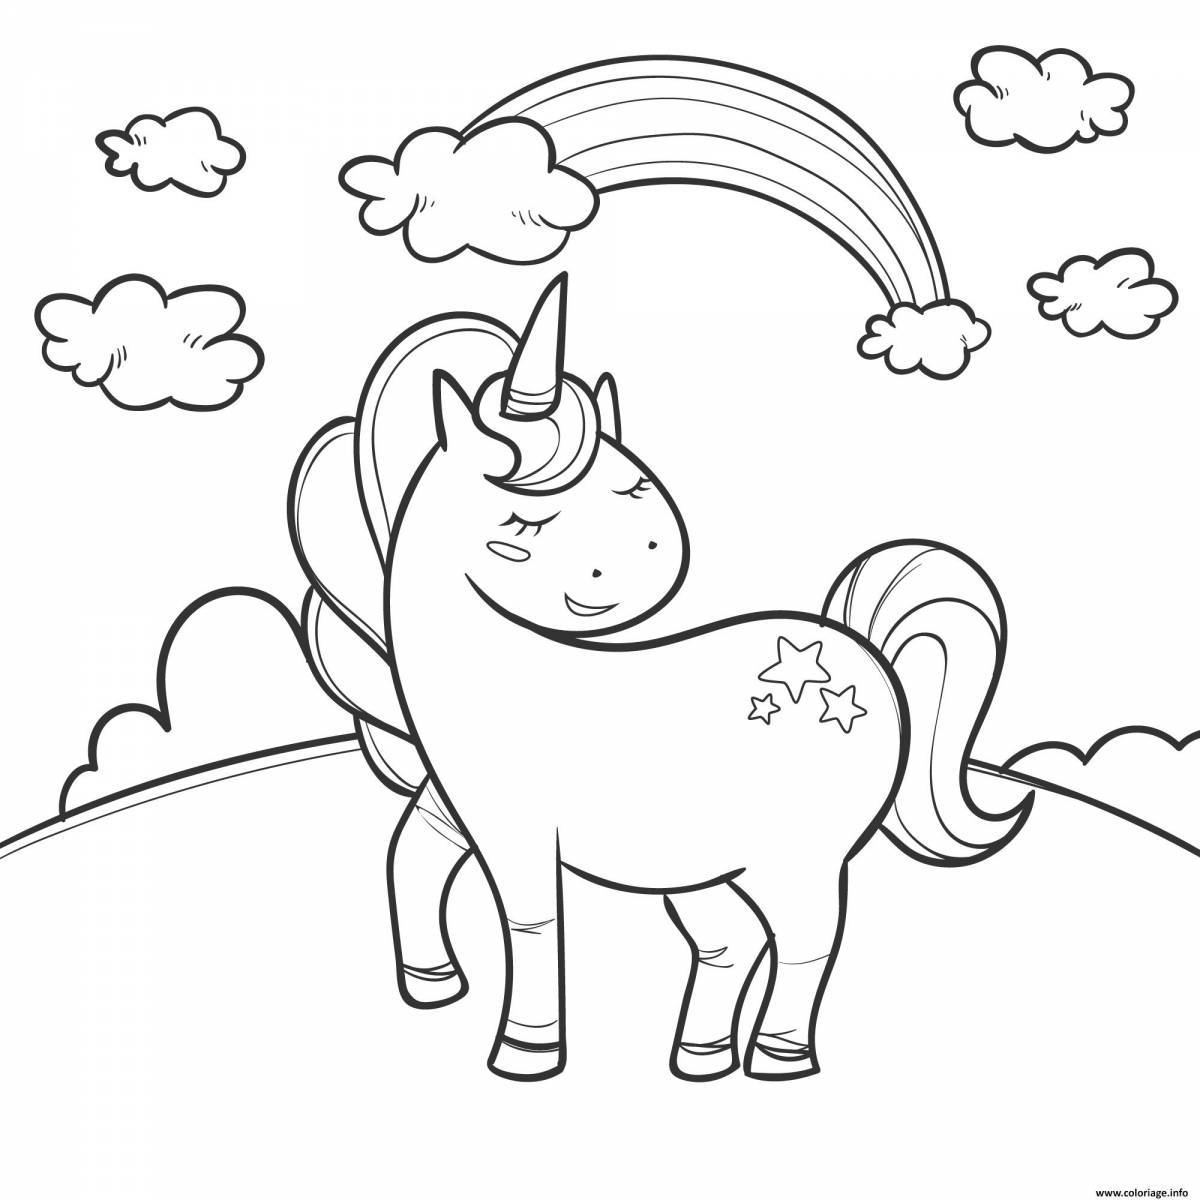 Magic unicorn coloring book for kids